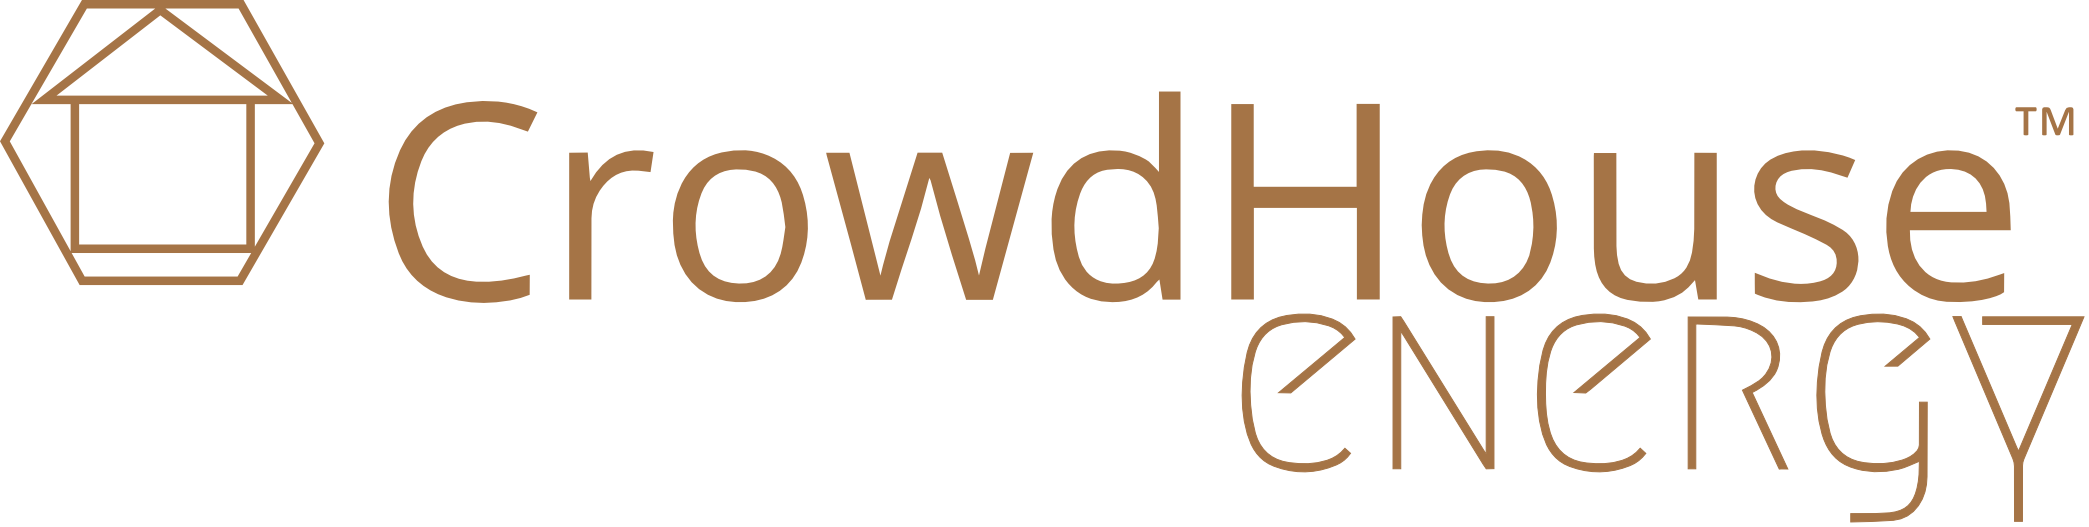 crowd house energy logo